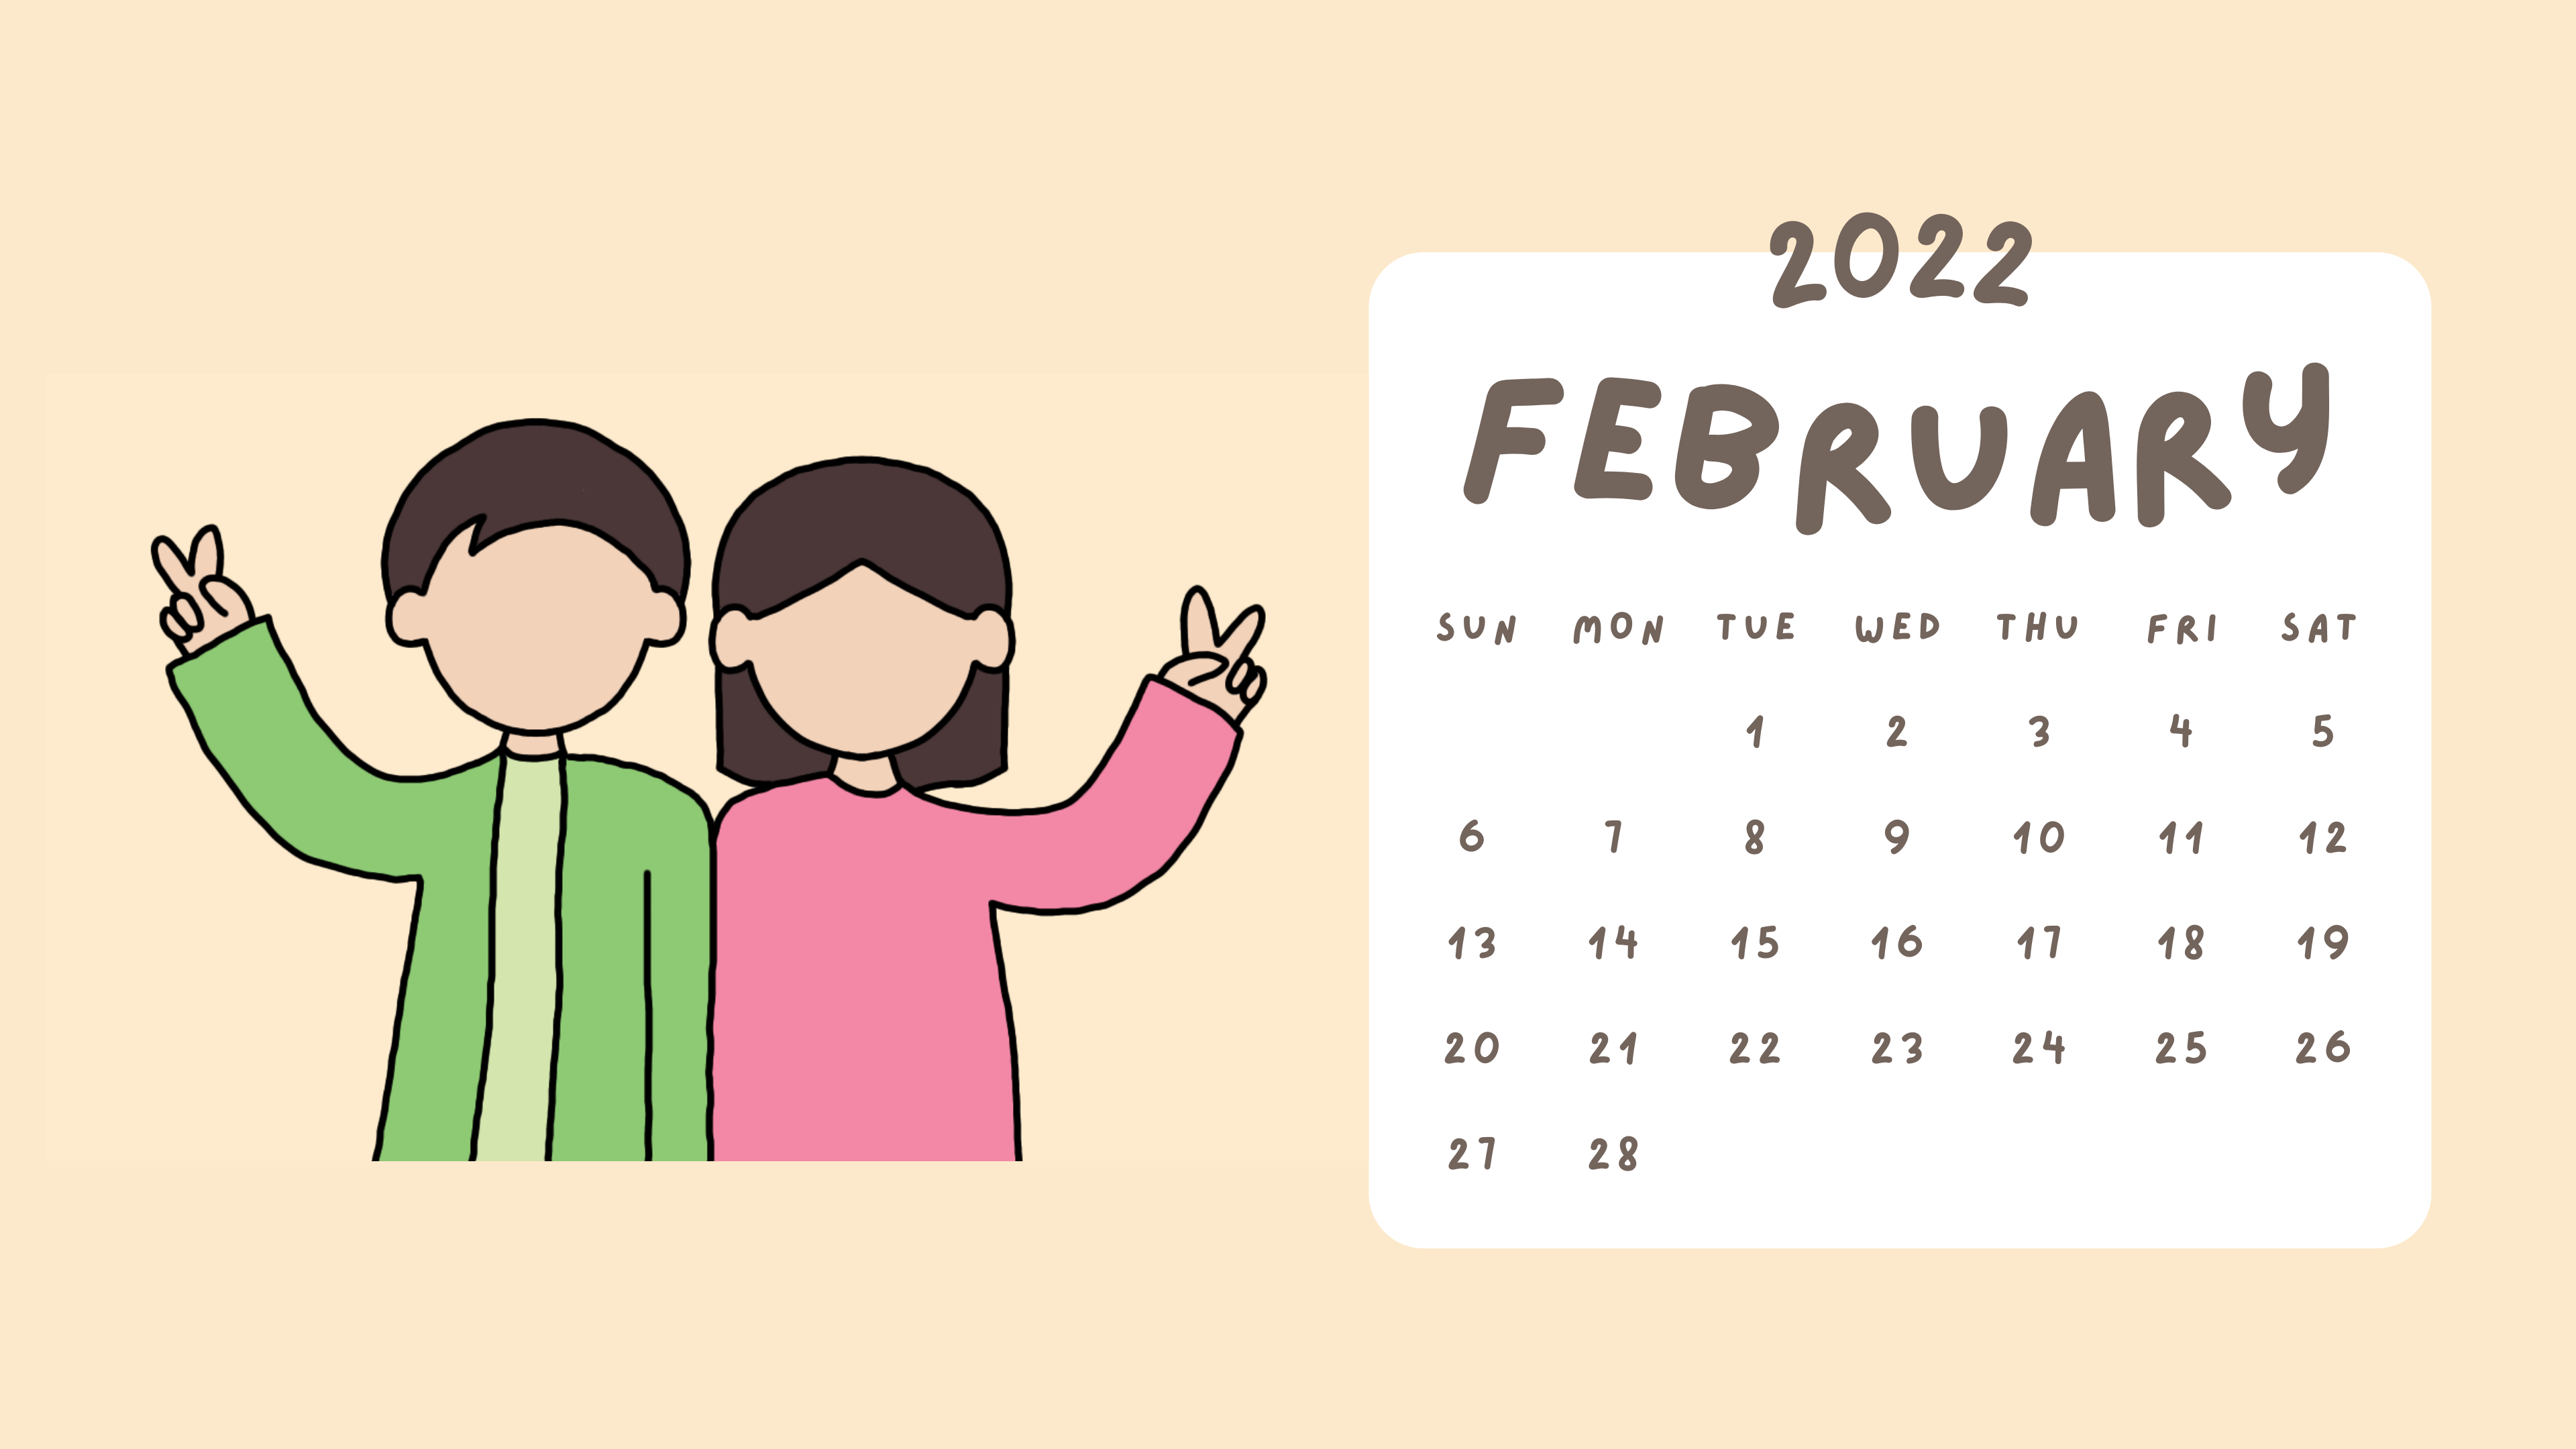 ivoci - Free Download: February 2022 Calendar Desktop Wallpapers - 3